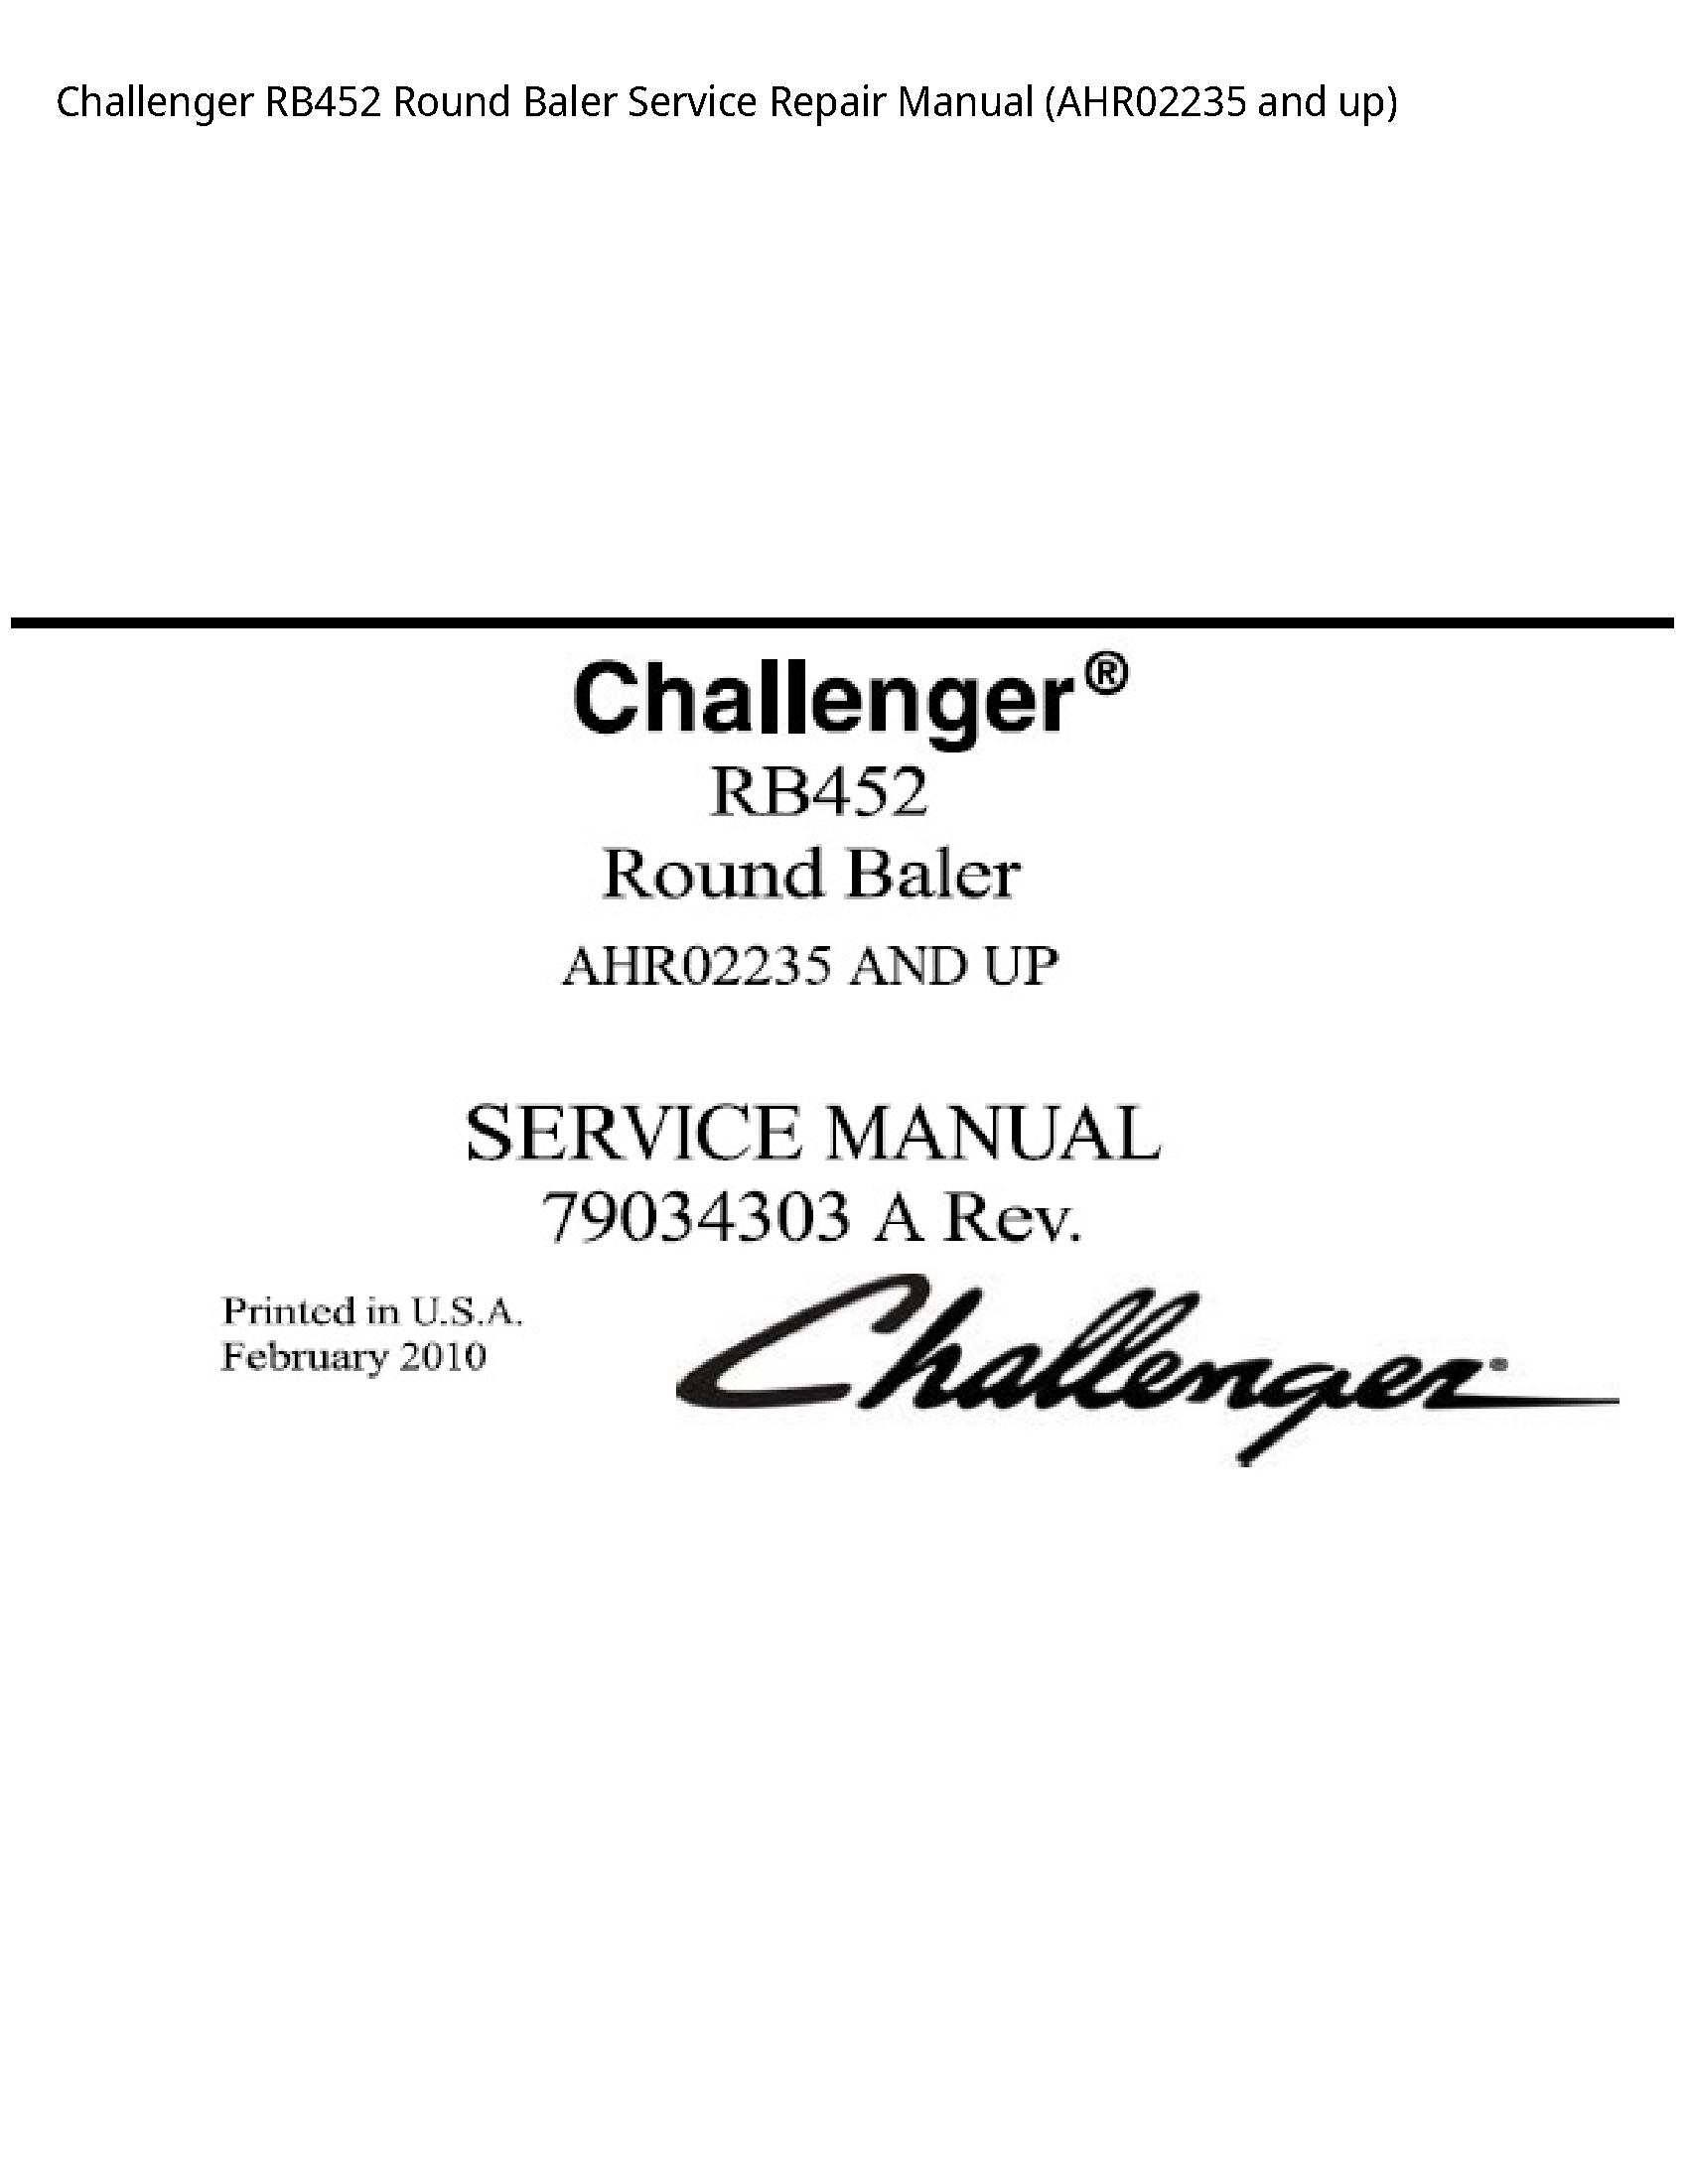 Challenger RB452 Round Baler manual